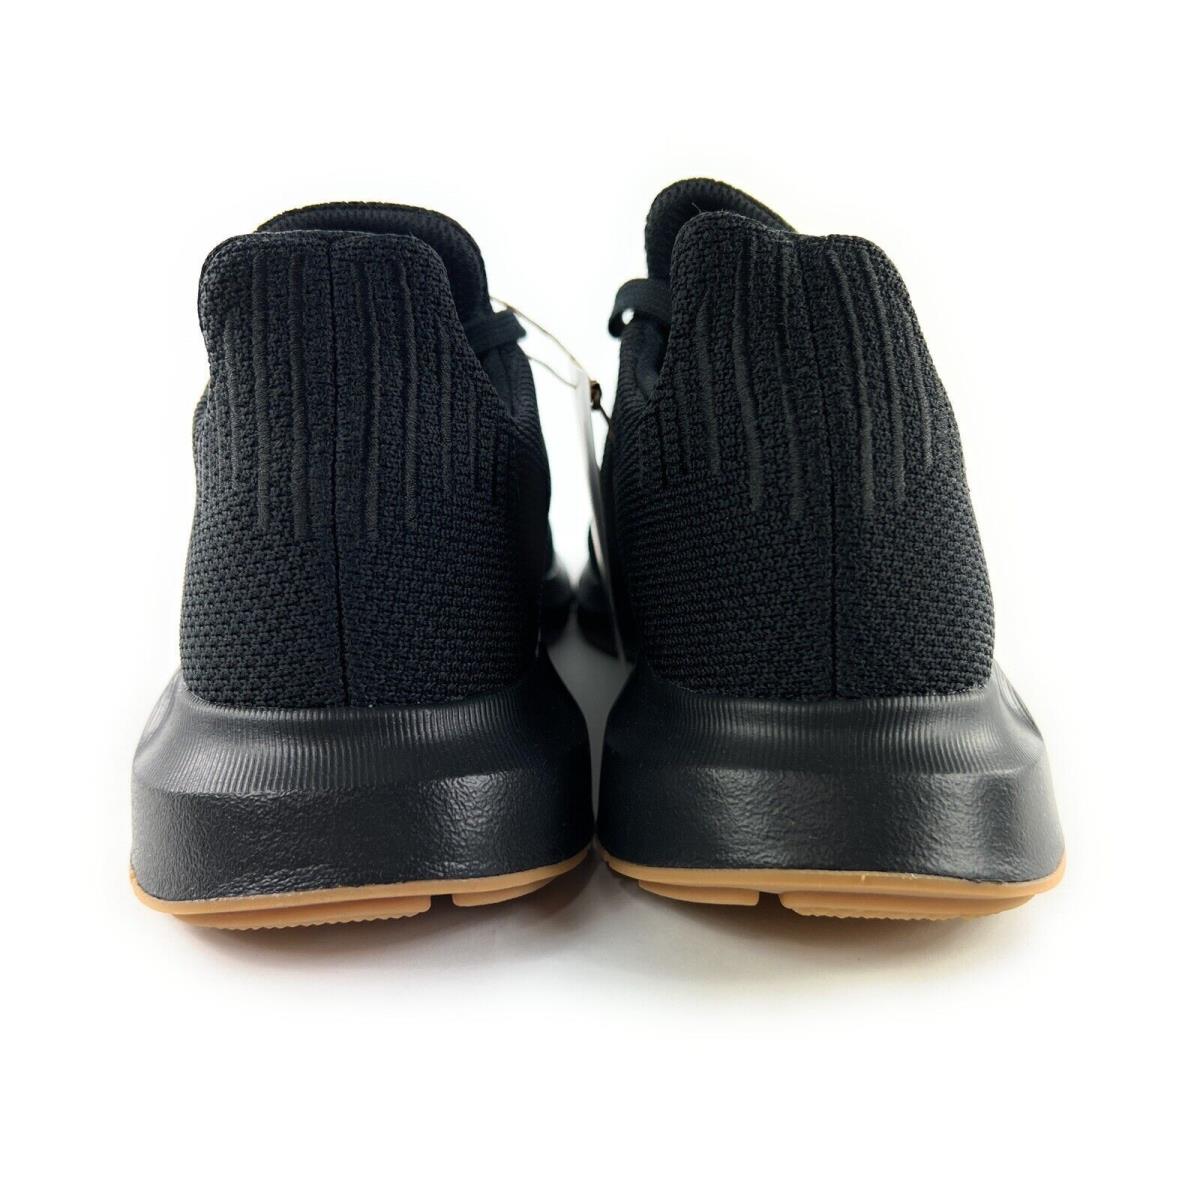 Adidas shoes Swift Run - Black 0